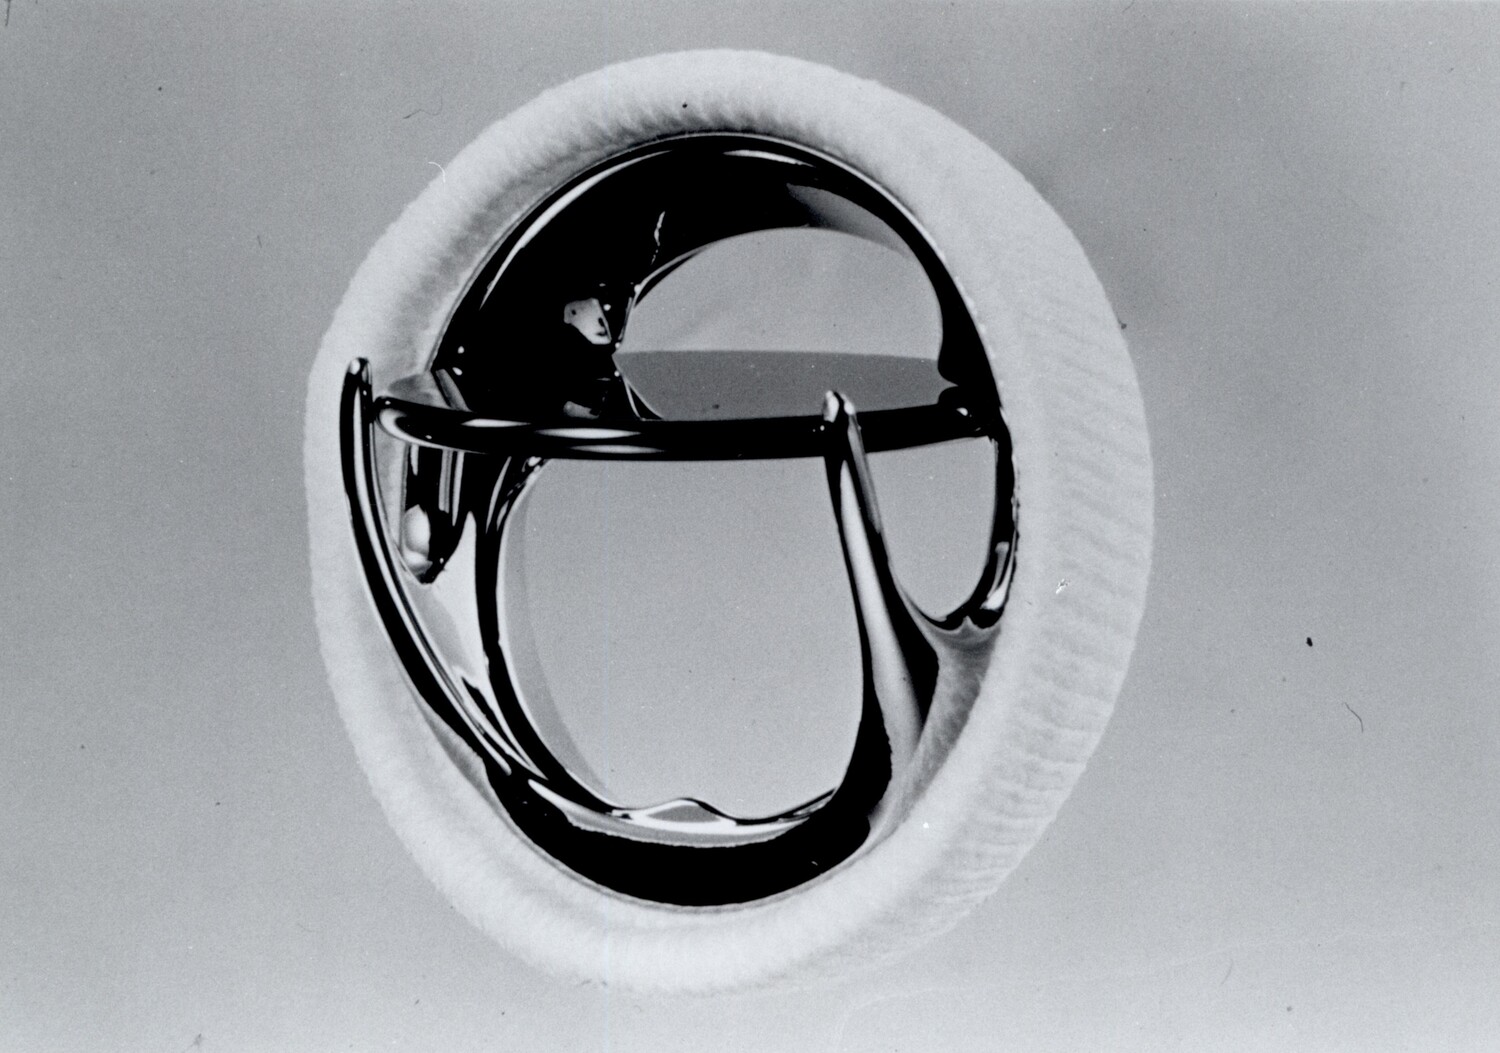 An archival photo of a mechanical heart valve